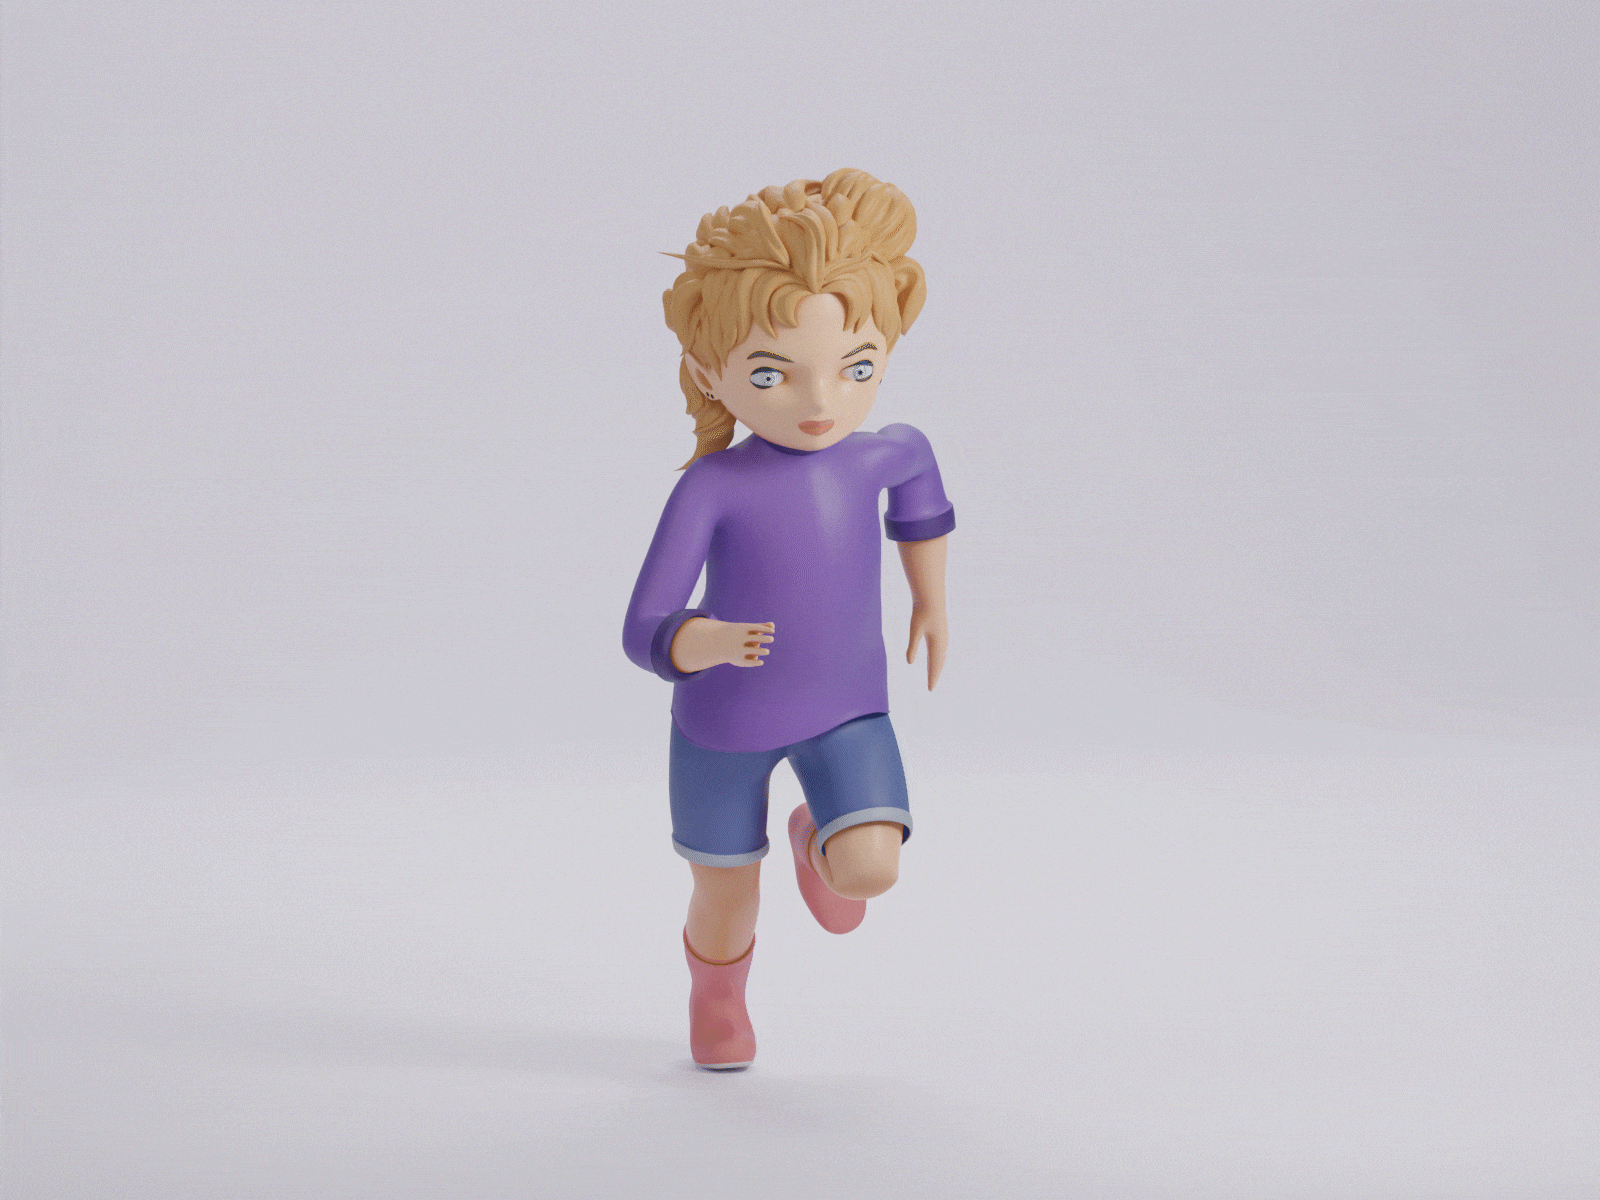 Girl Running Animation ( Blender ) 3d animation baby blender buildinc character girl loop motion graphics running stylish walk